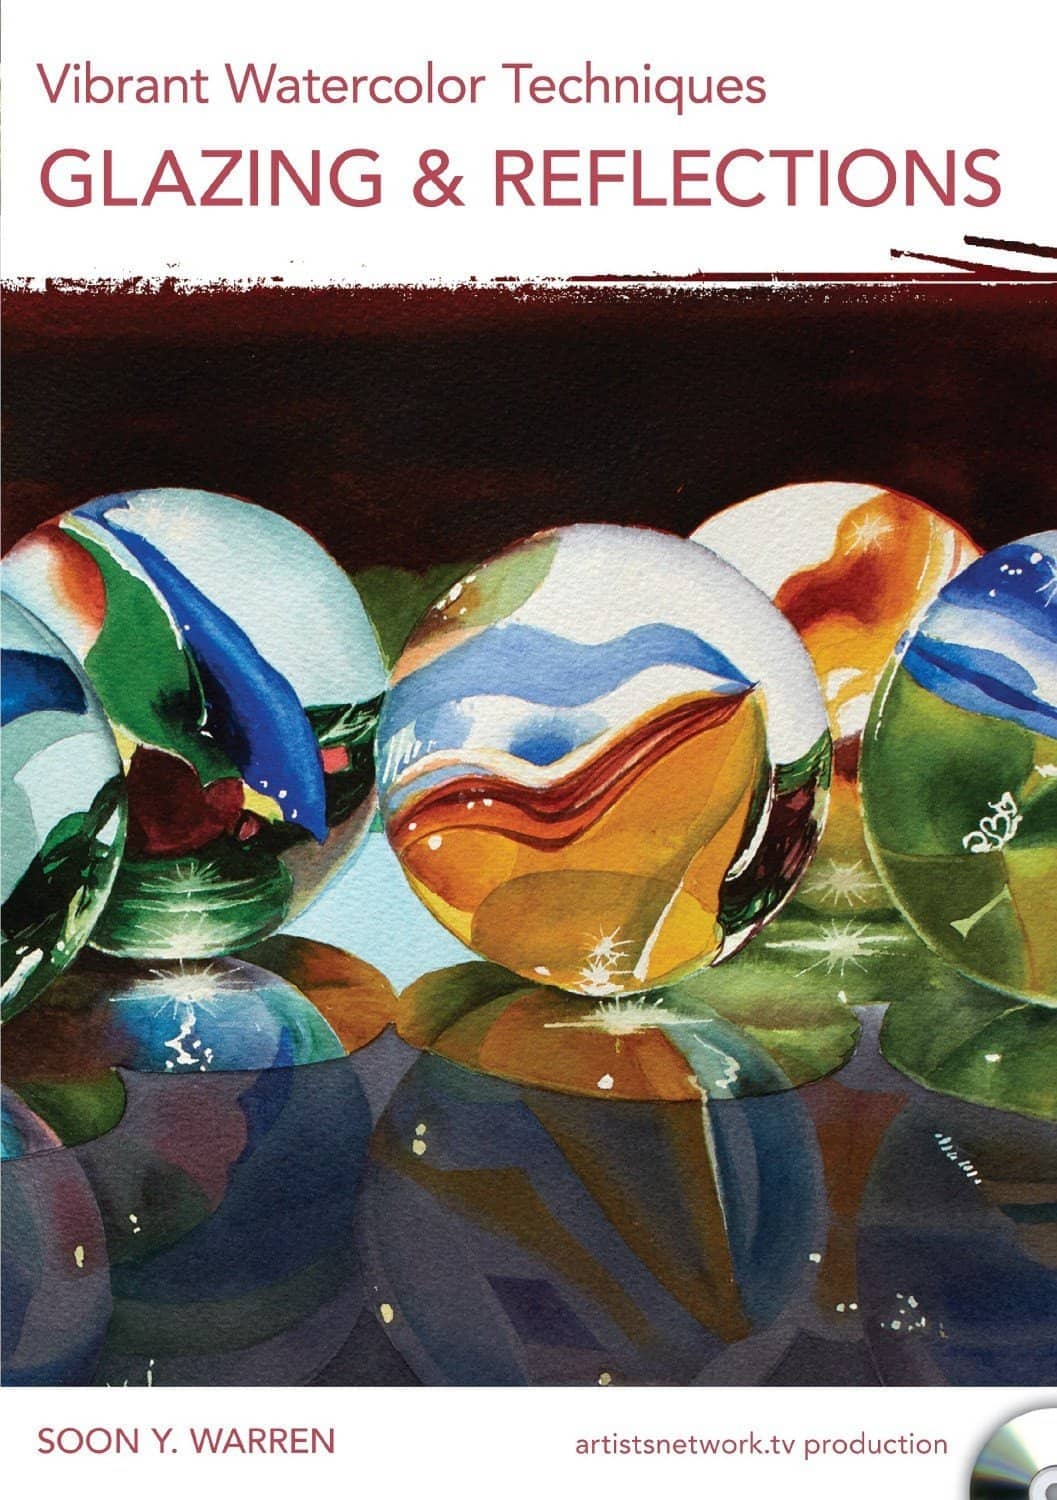 Soon Y. Warren: Vibrant Watercolor Techniques - Glazing & Reflections